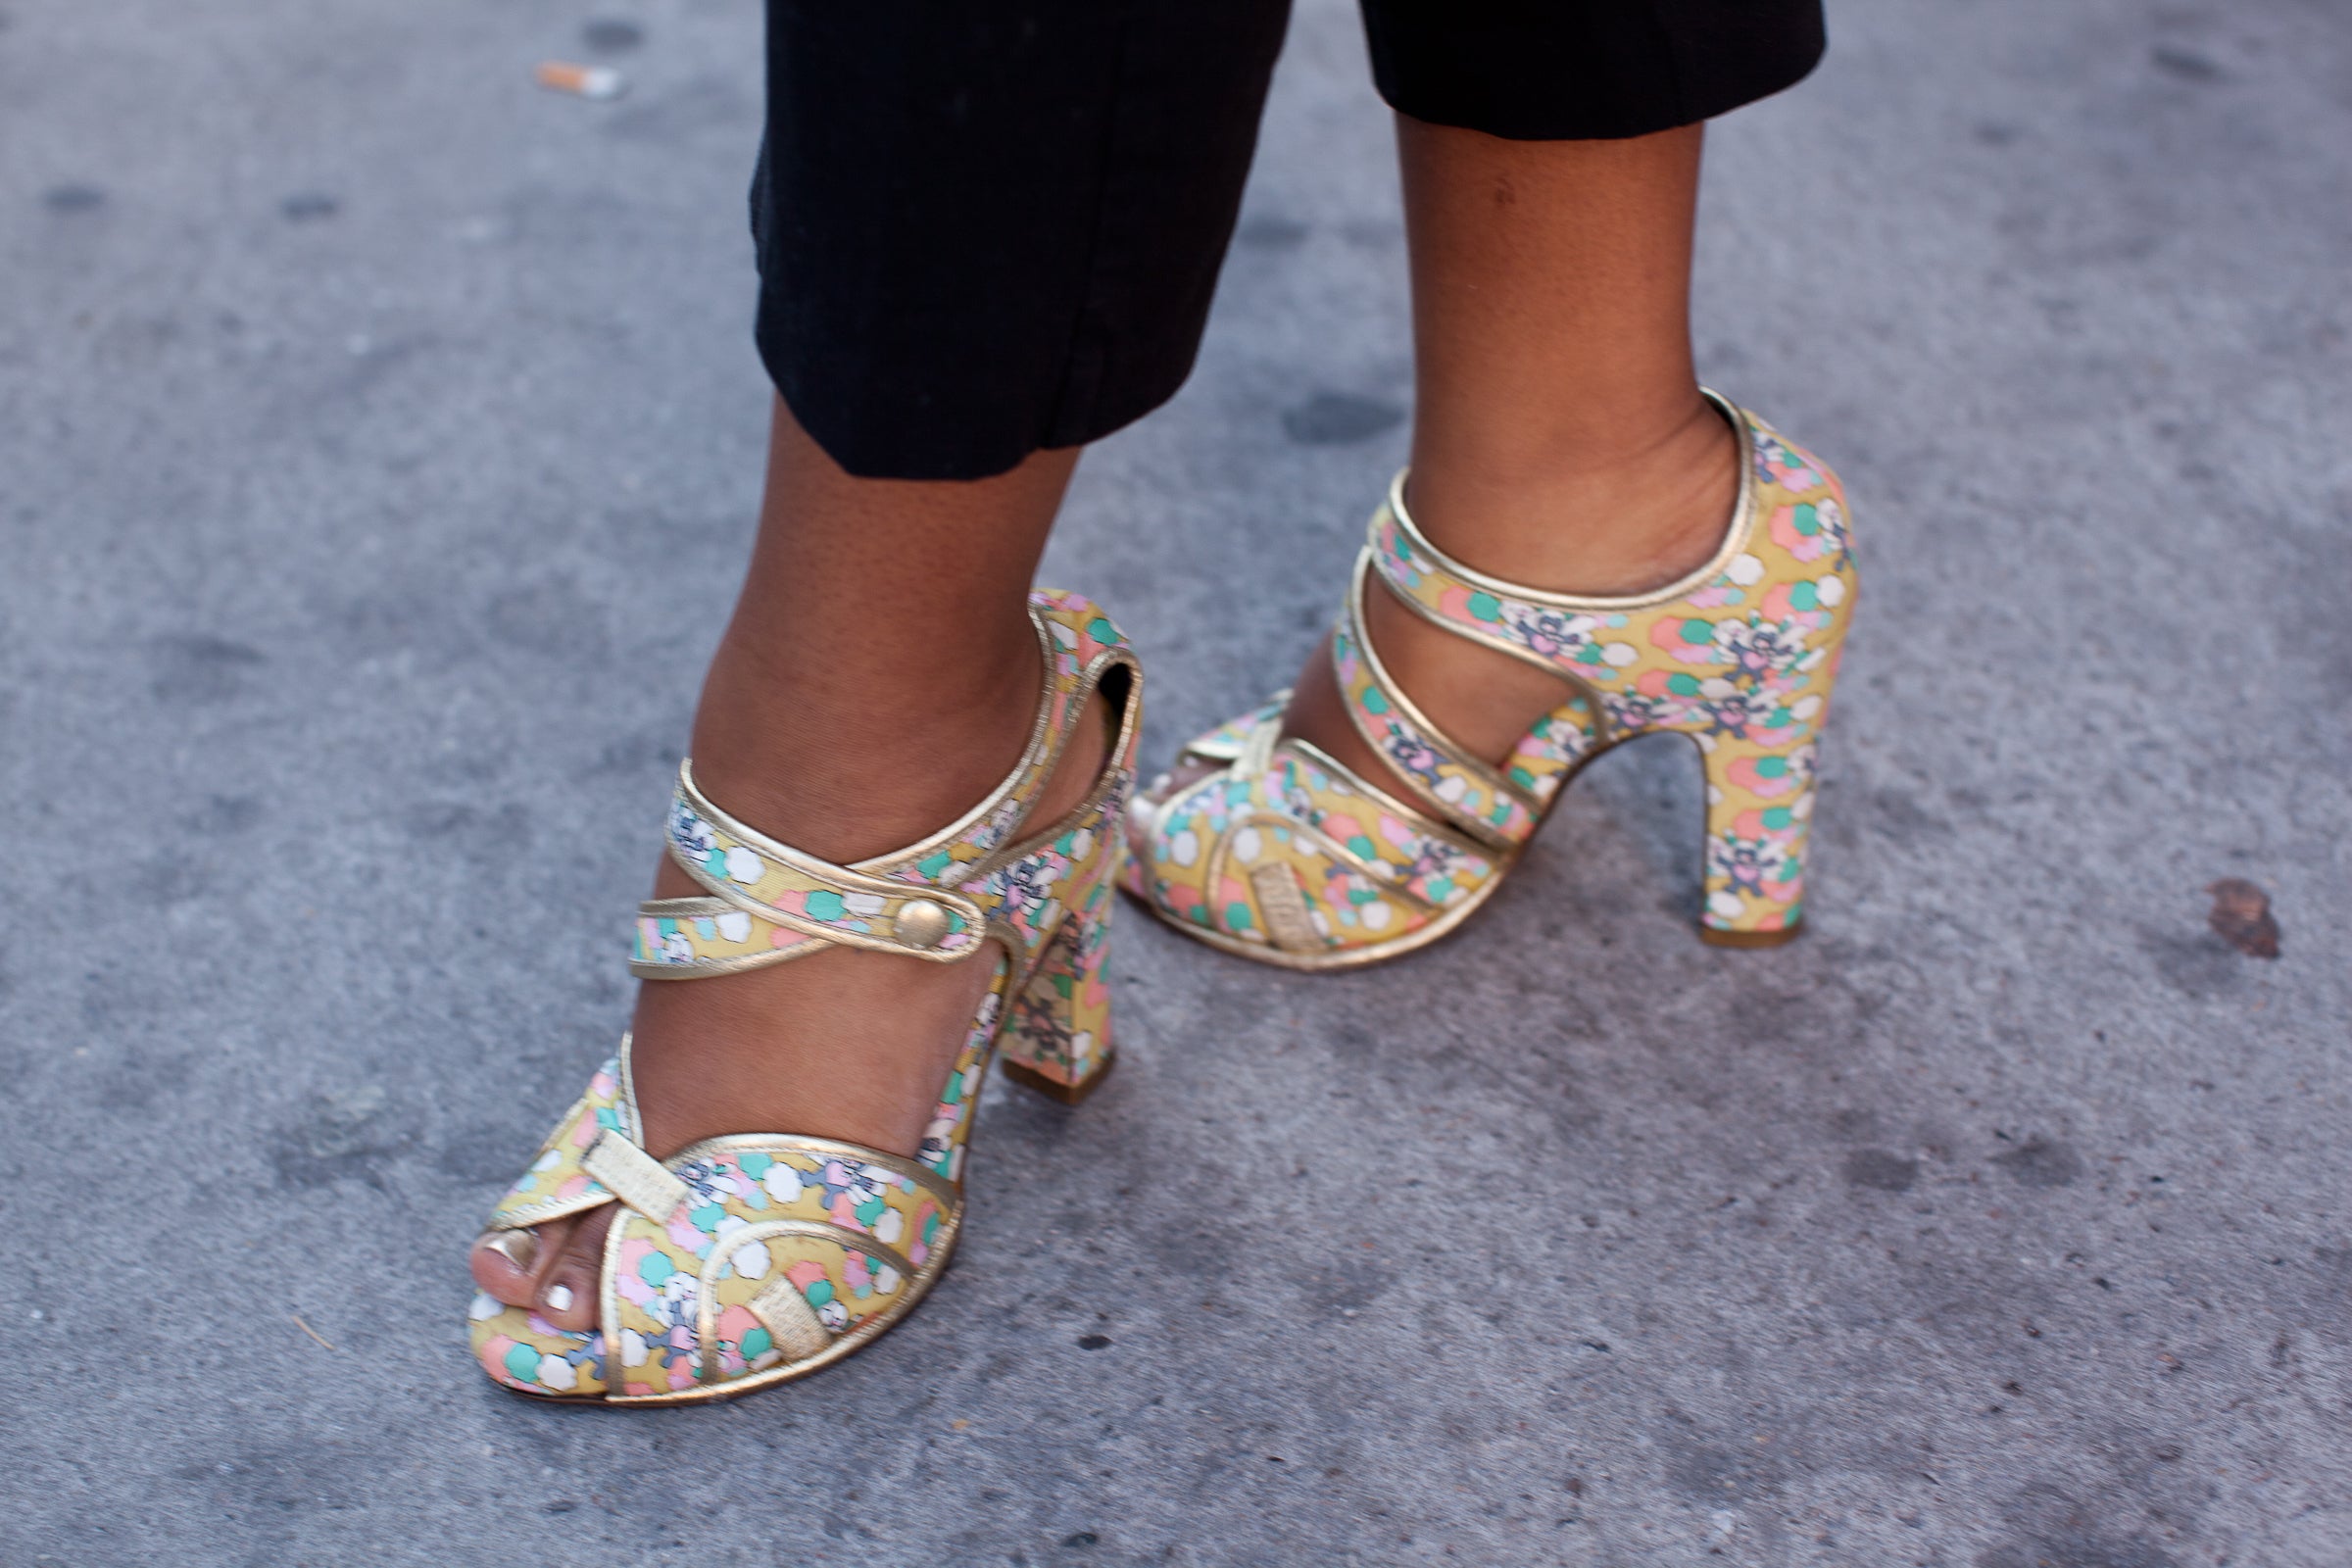 Sassy Sandals
